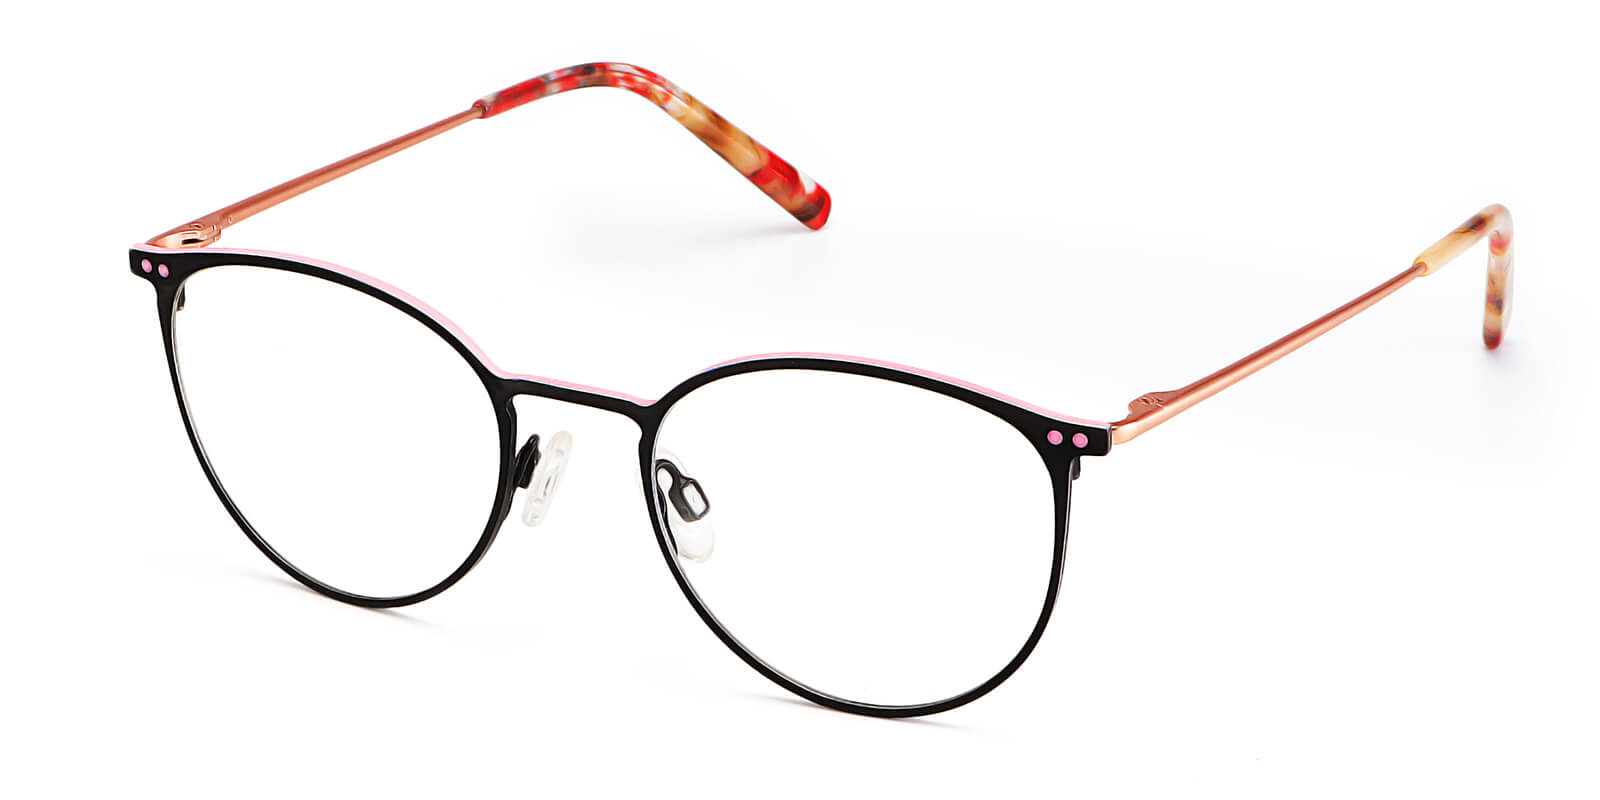 Black Irvette - Oval Glasses